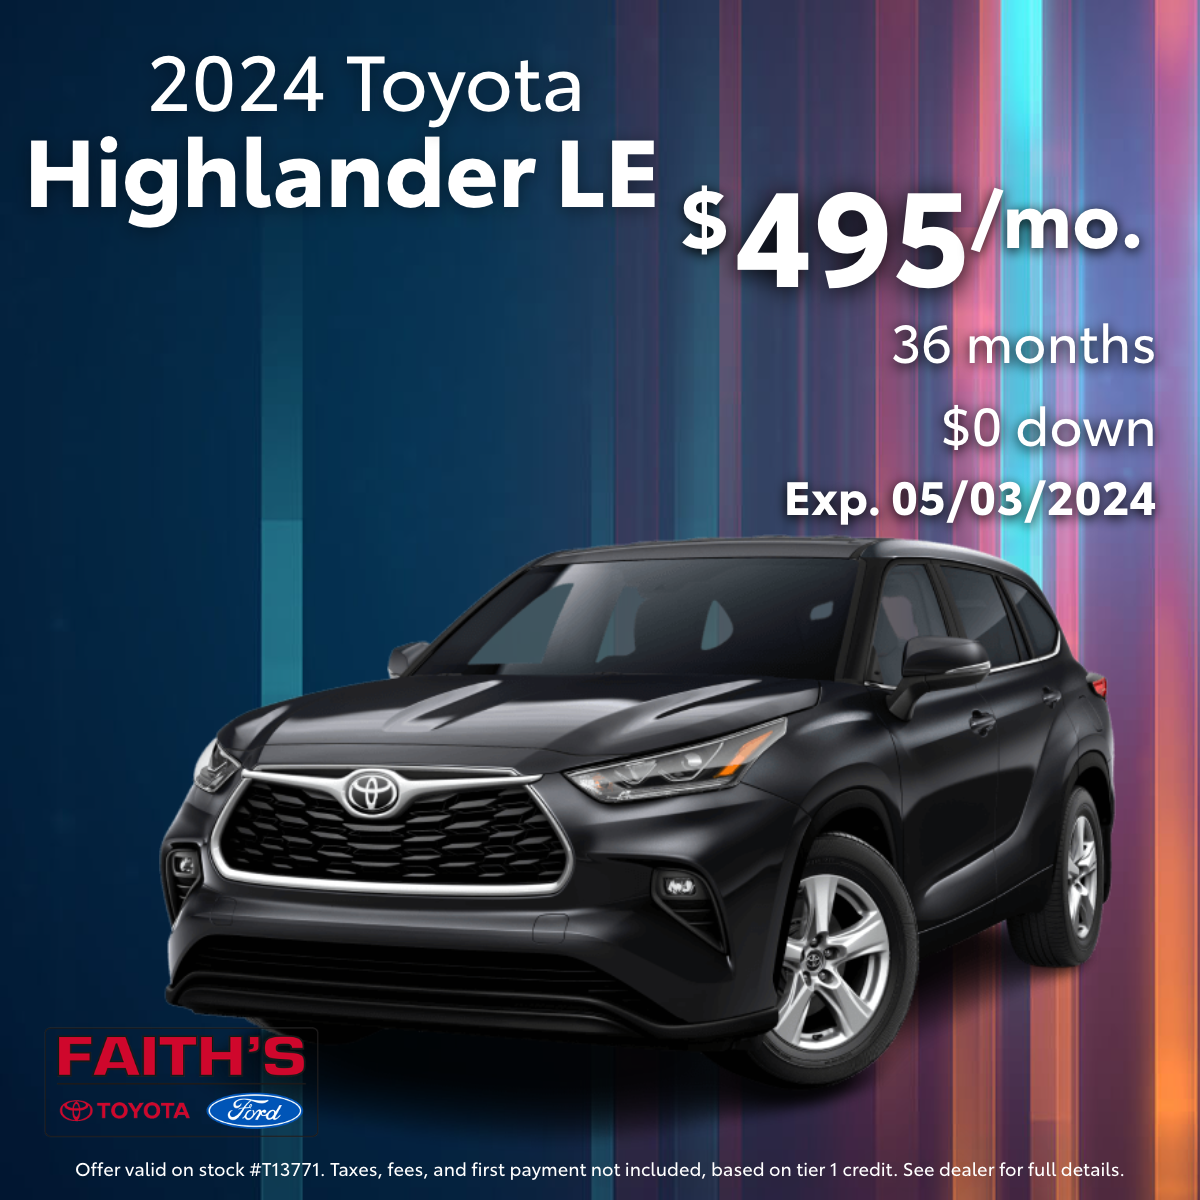 2024 Toyota Highlander Lease Offer | Faiths Toyota